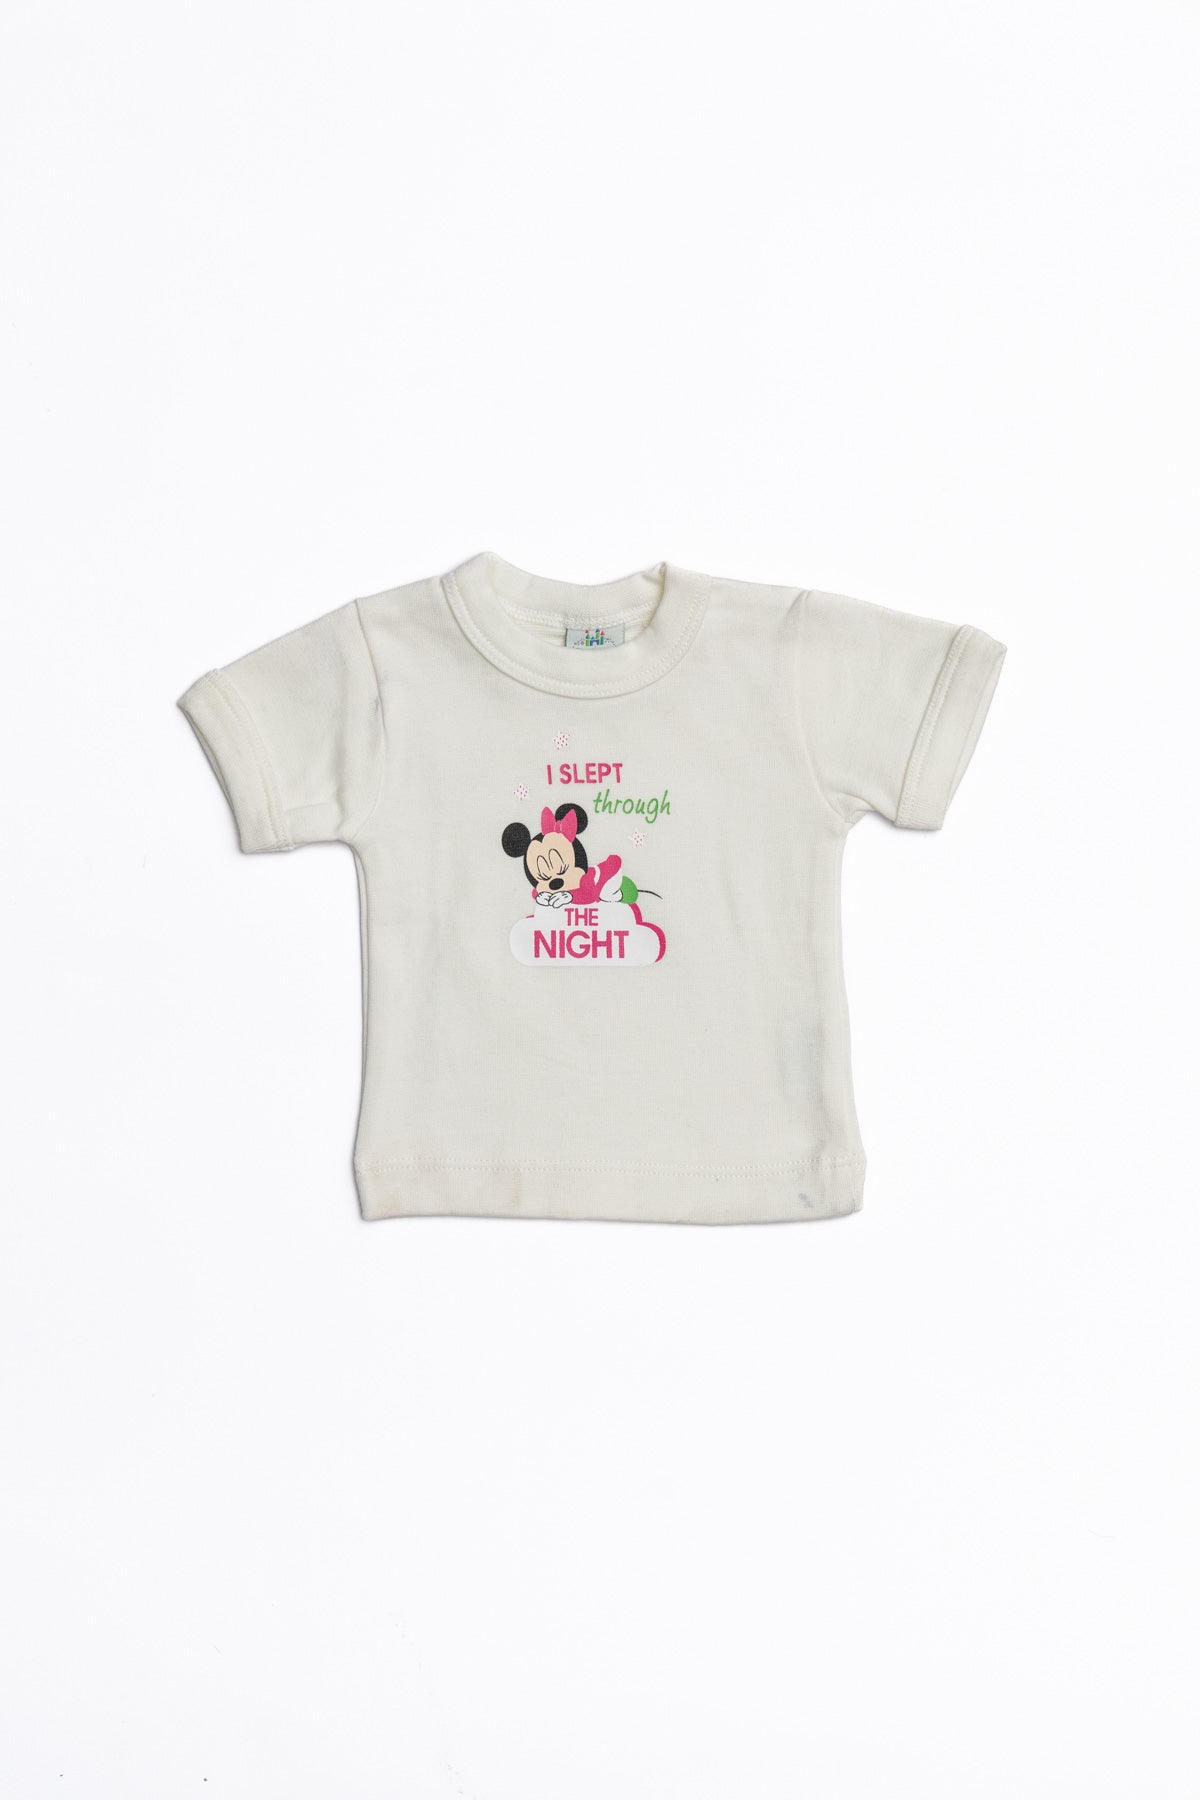 T-Shirt Baby Minnie " The Night" Half sleeve 4122